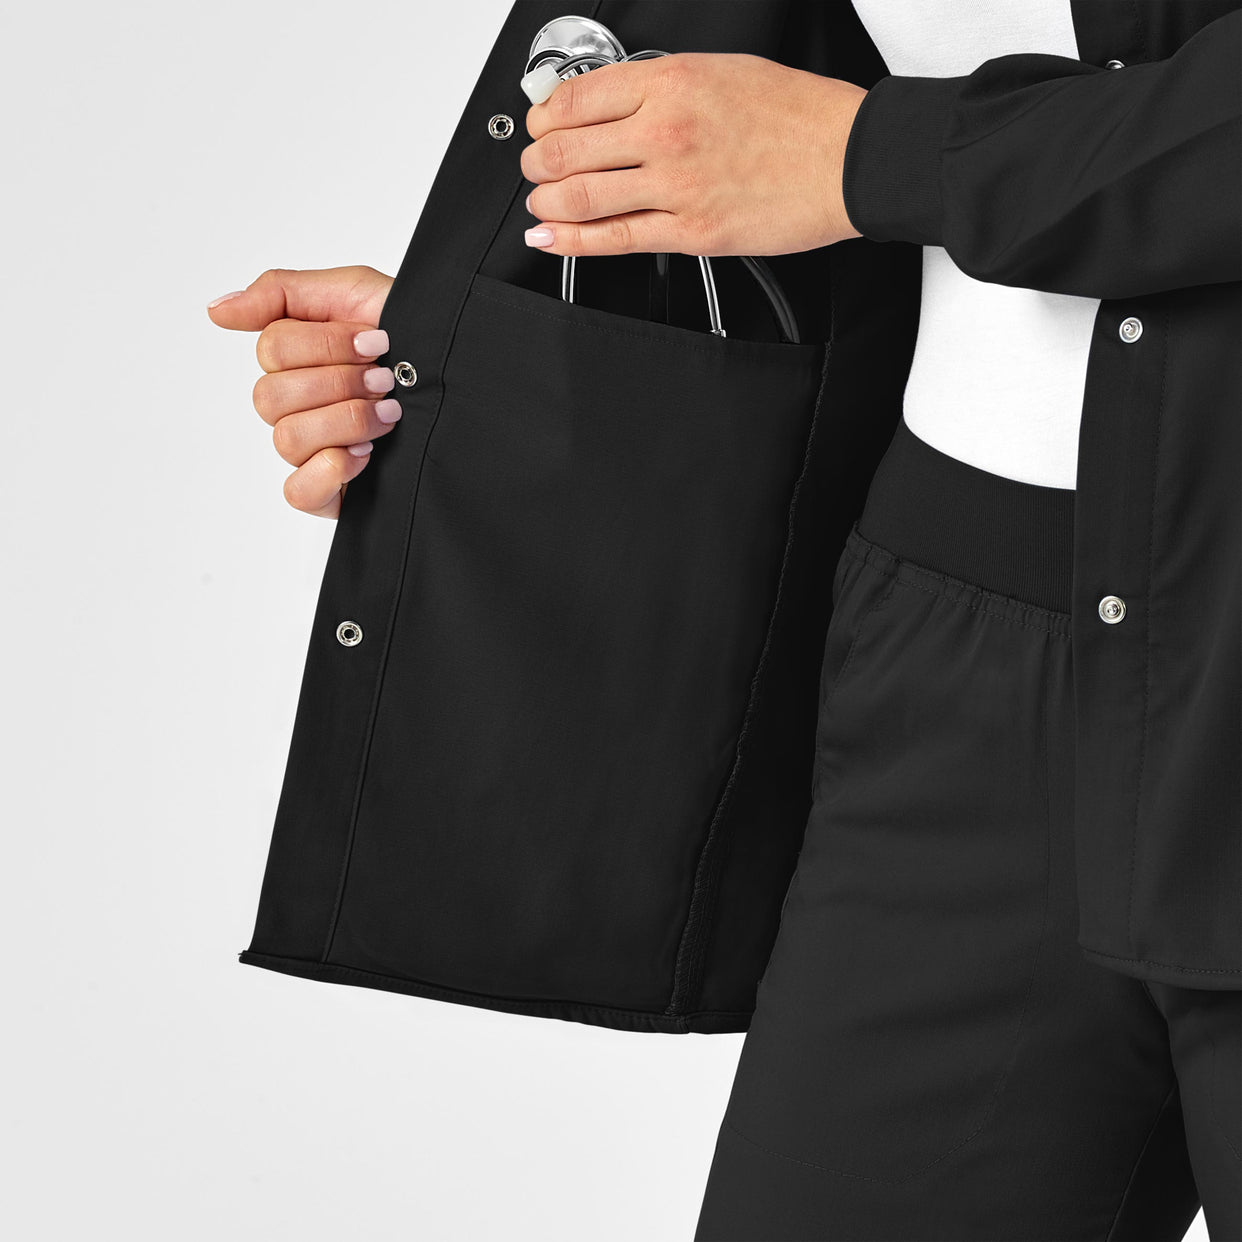 WonderWink PRO Women's Snap Front Scrub Jacket - Black